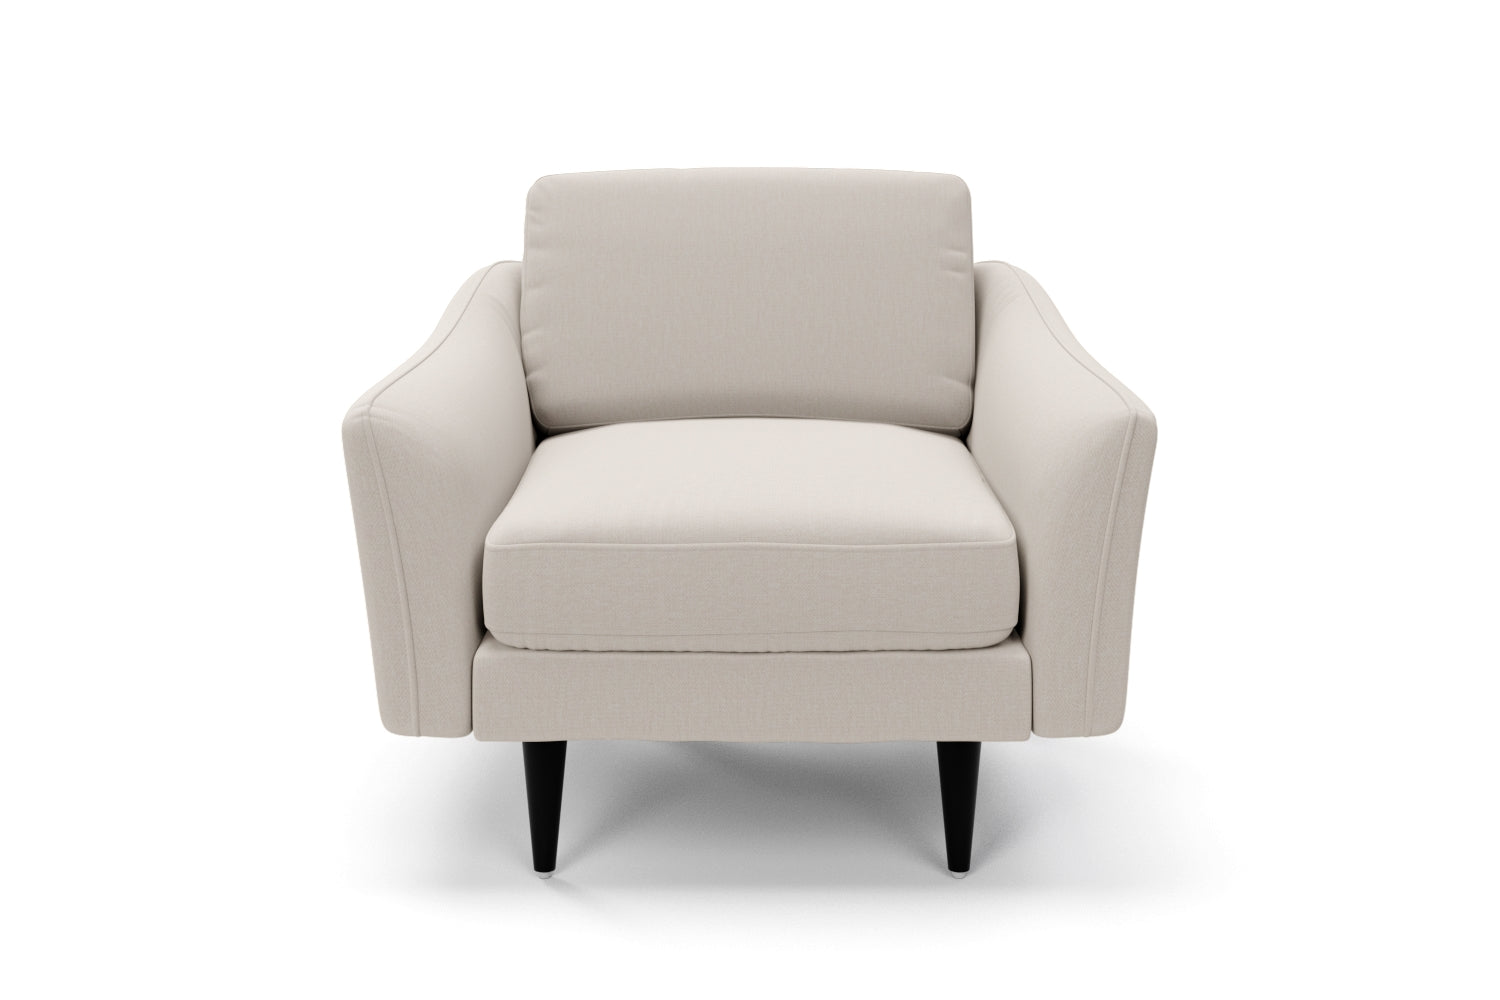 SNUG | The Rebel 1 Seater Armchair in Biscuit variant_40520421638192